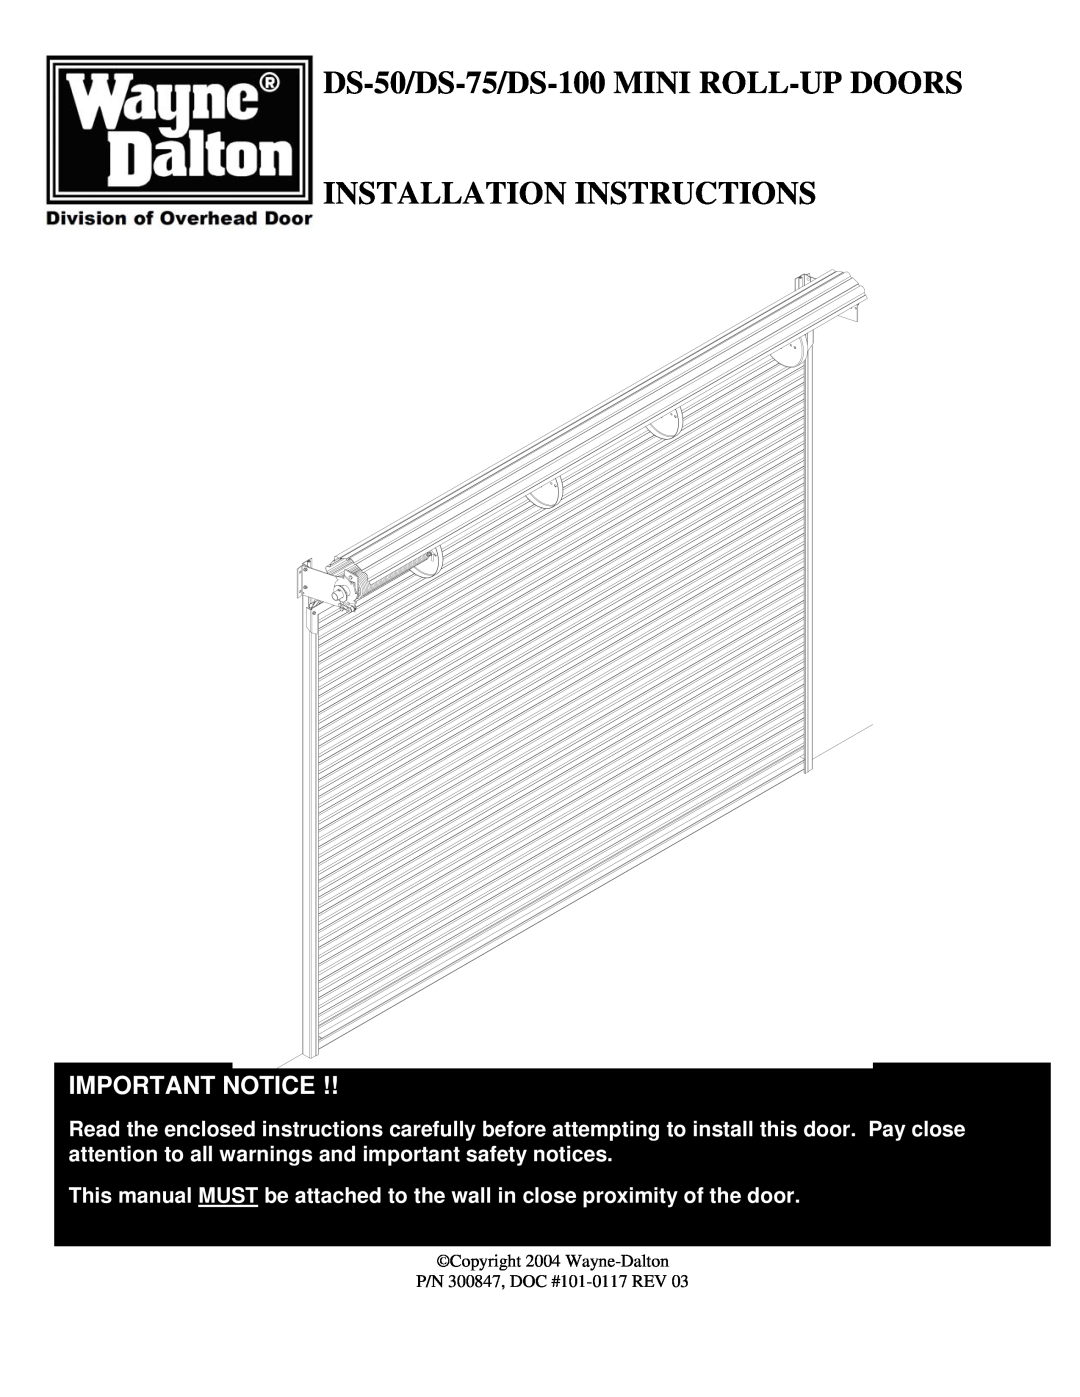 Wayne-Dalton installation instructions DS-50/DS-75/DS-100MINI ROLL-UPDOORS, Installation Instructions, Important Notice 